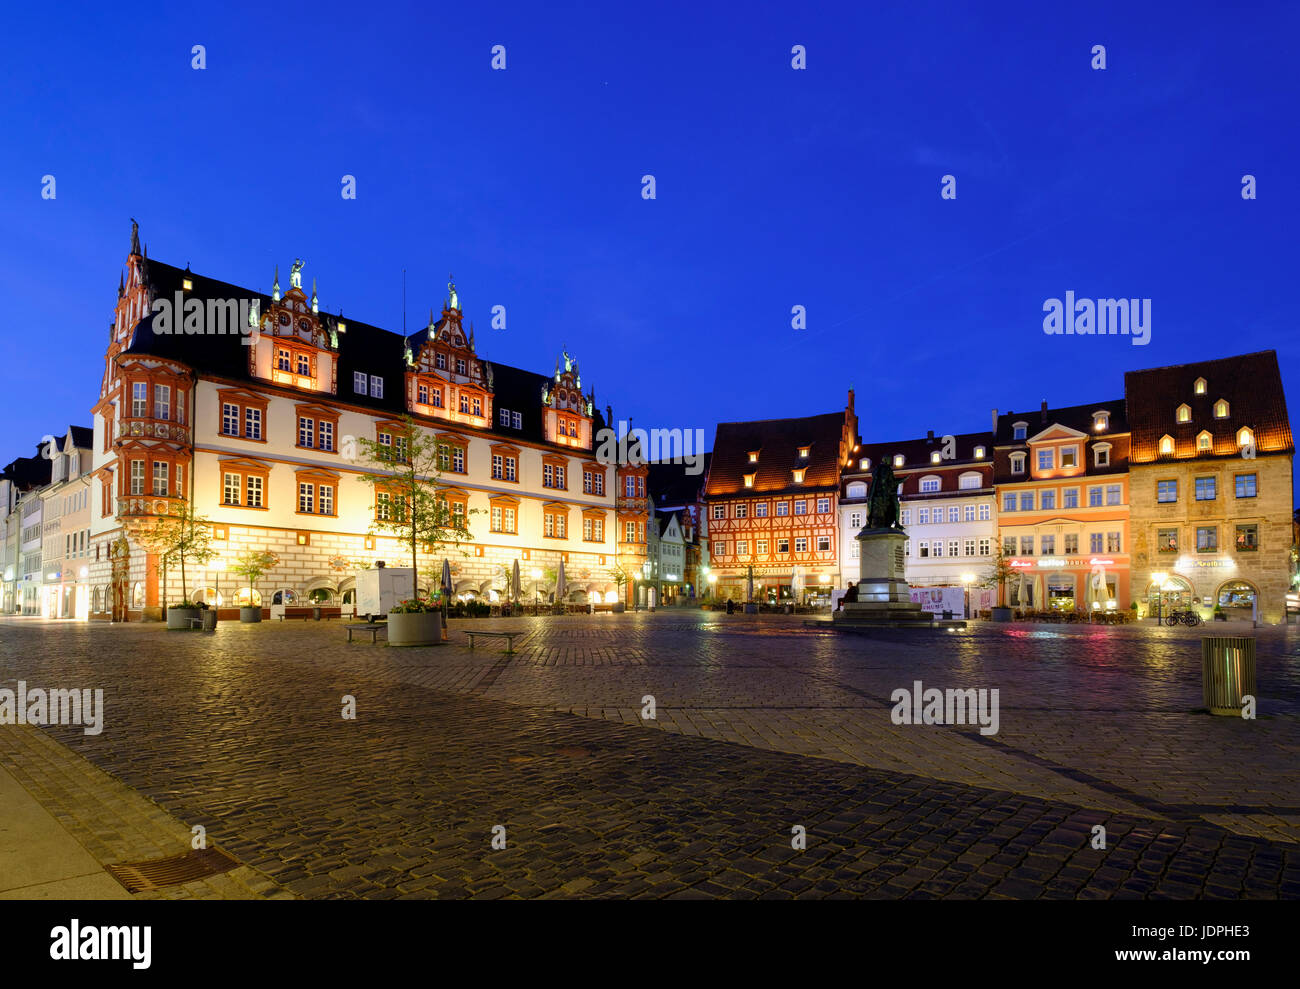 Stadthaus and Prince Albert Memorial, Market Square, Coburg, Upper Franconia, Franconia, Bavaria, Germany Stock Photo